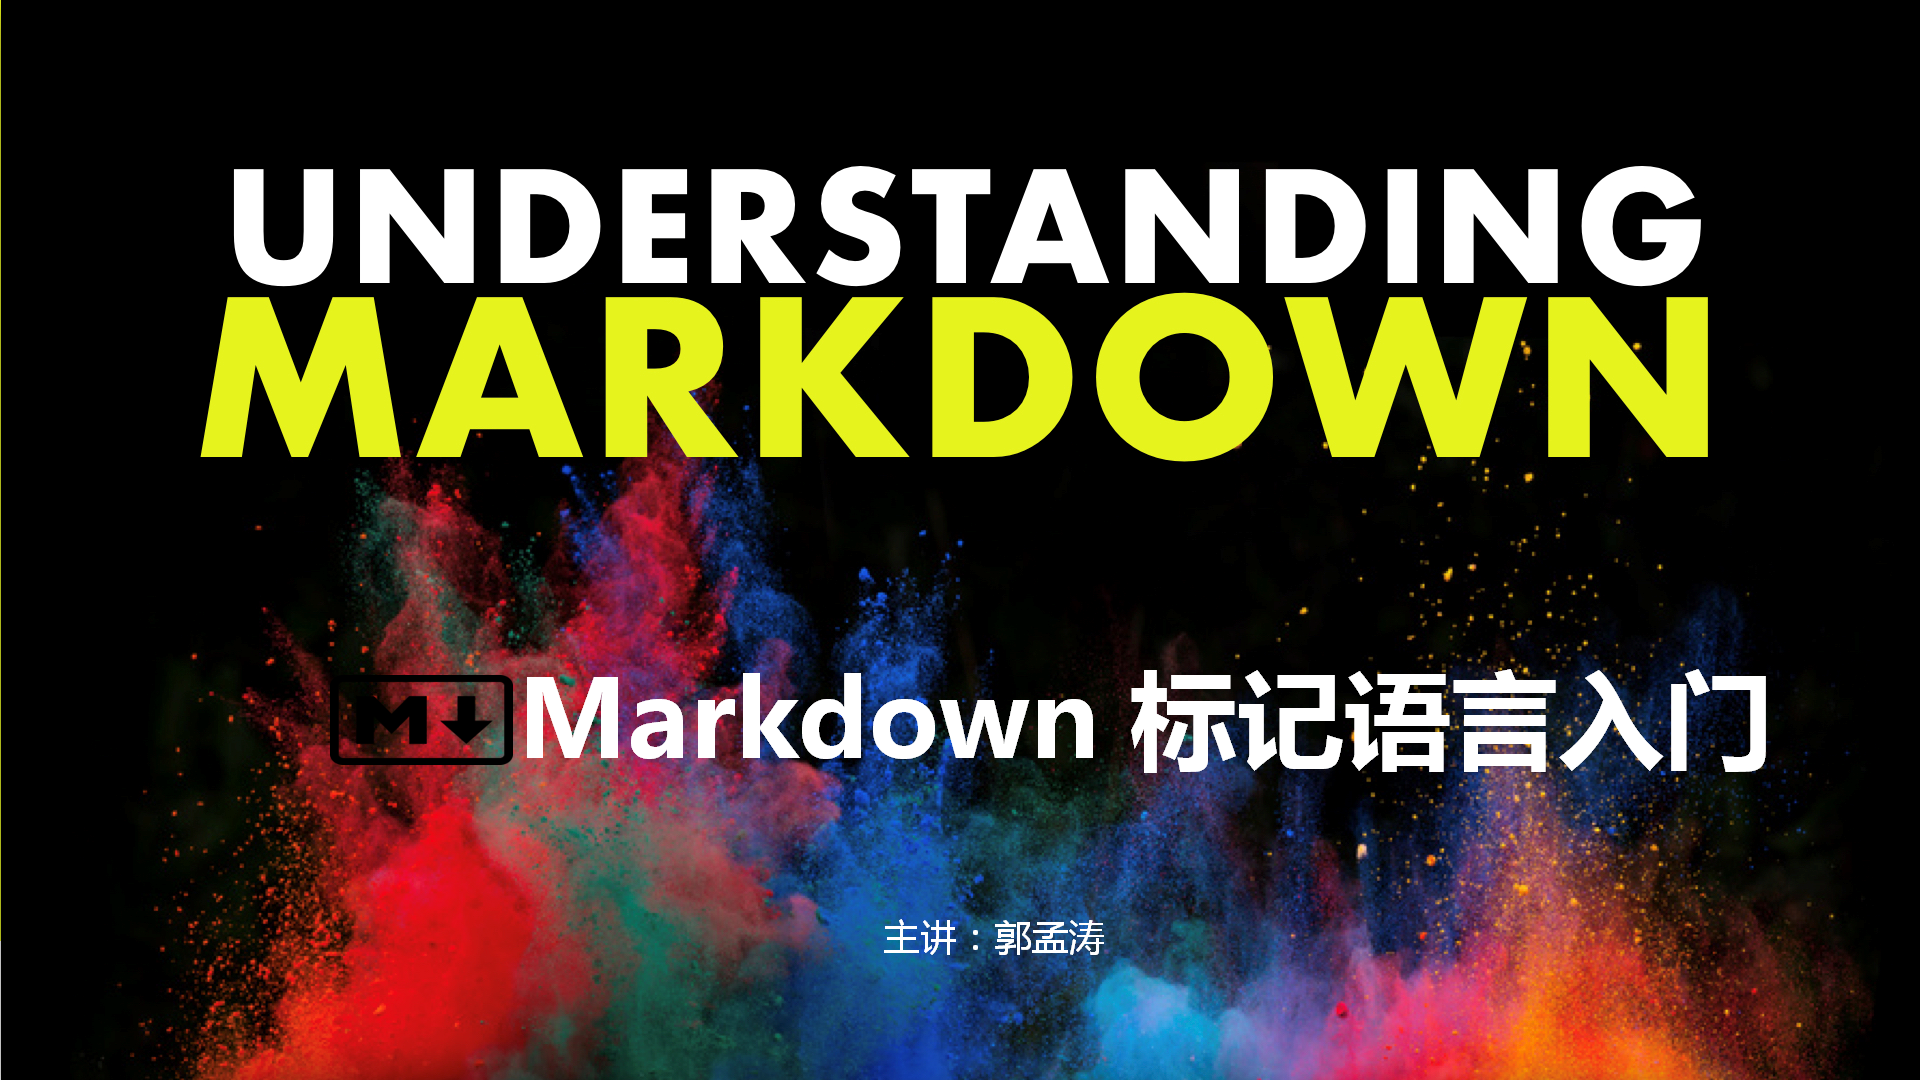  Markdown Markup Language